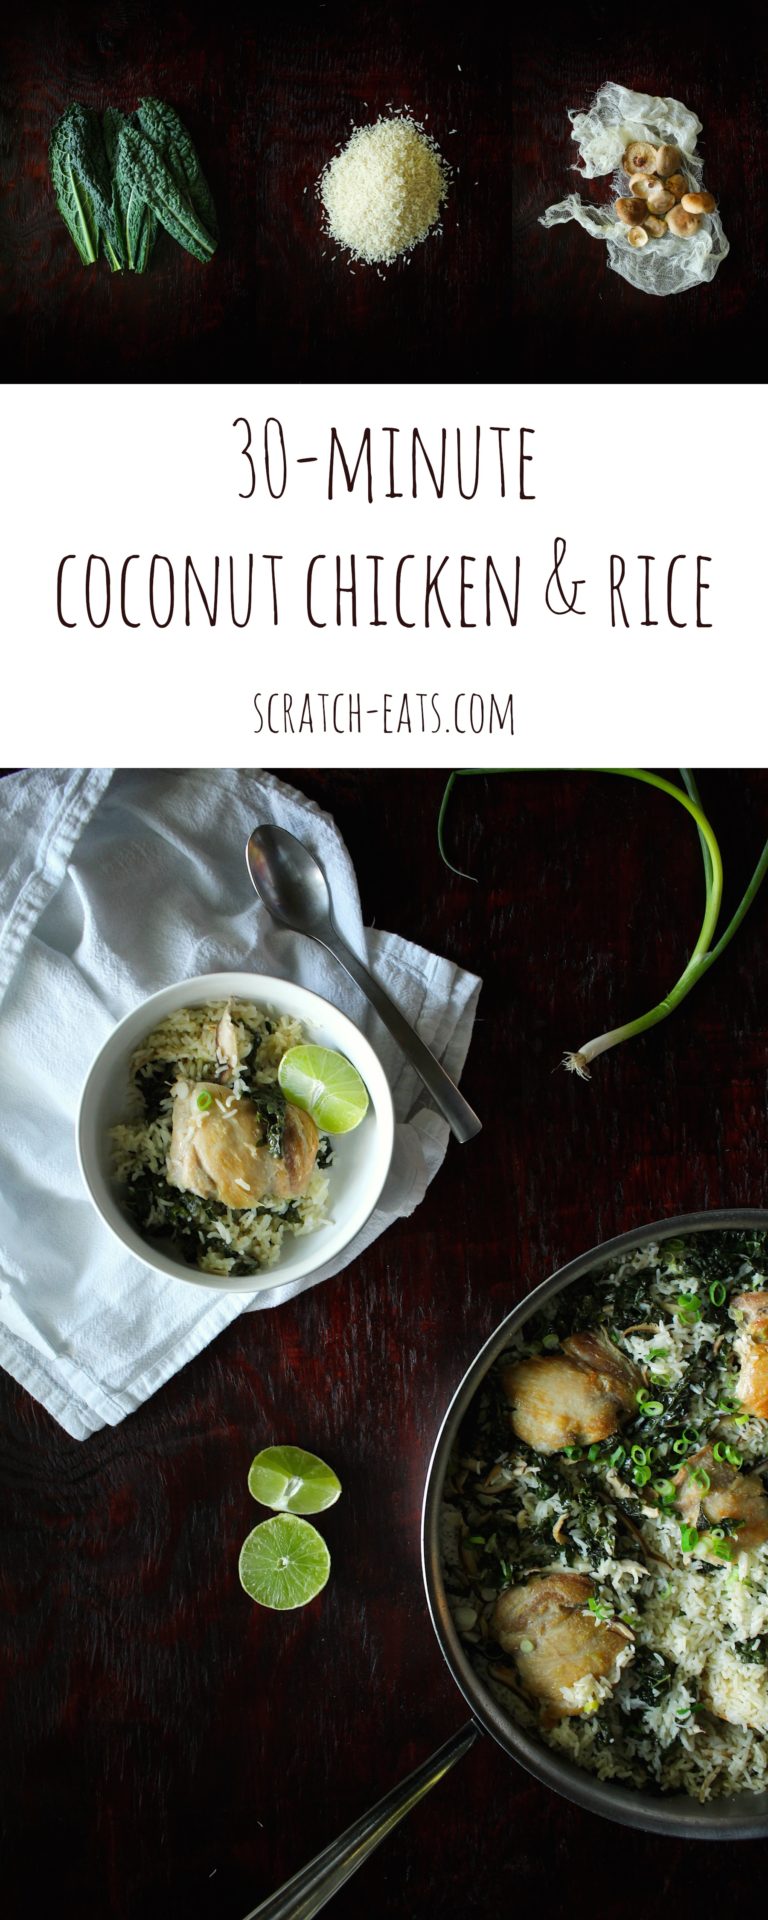 30 minute Coconut Chicken & Rice - Scratch Eats